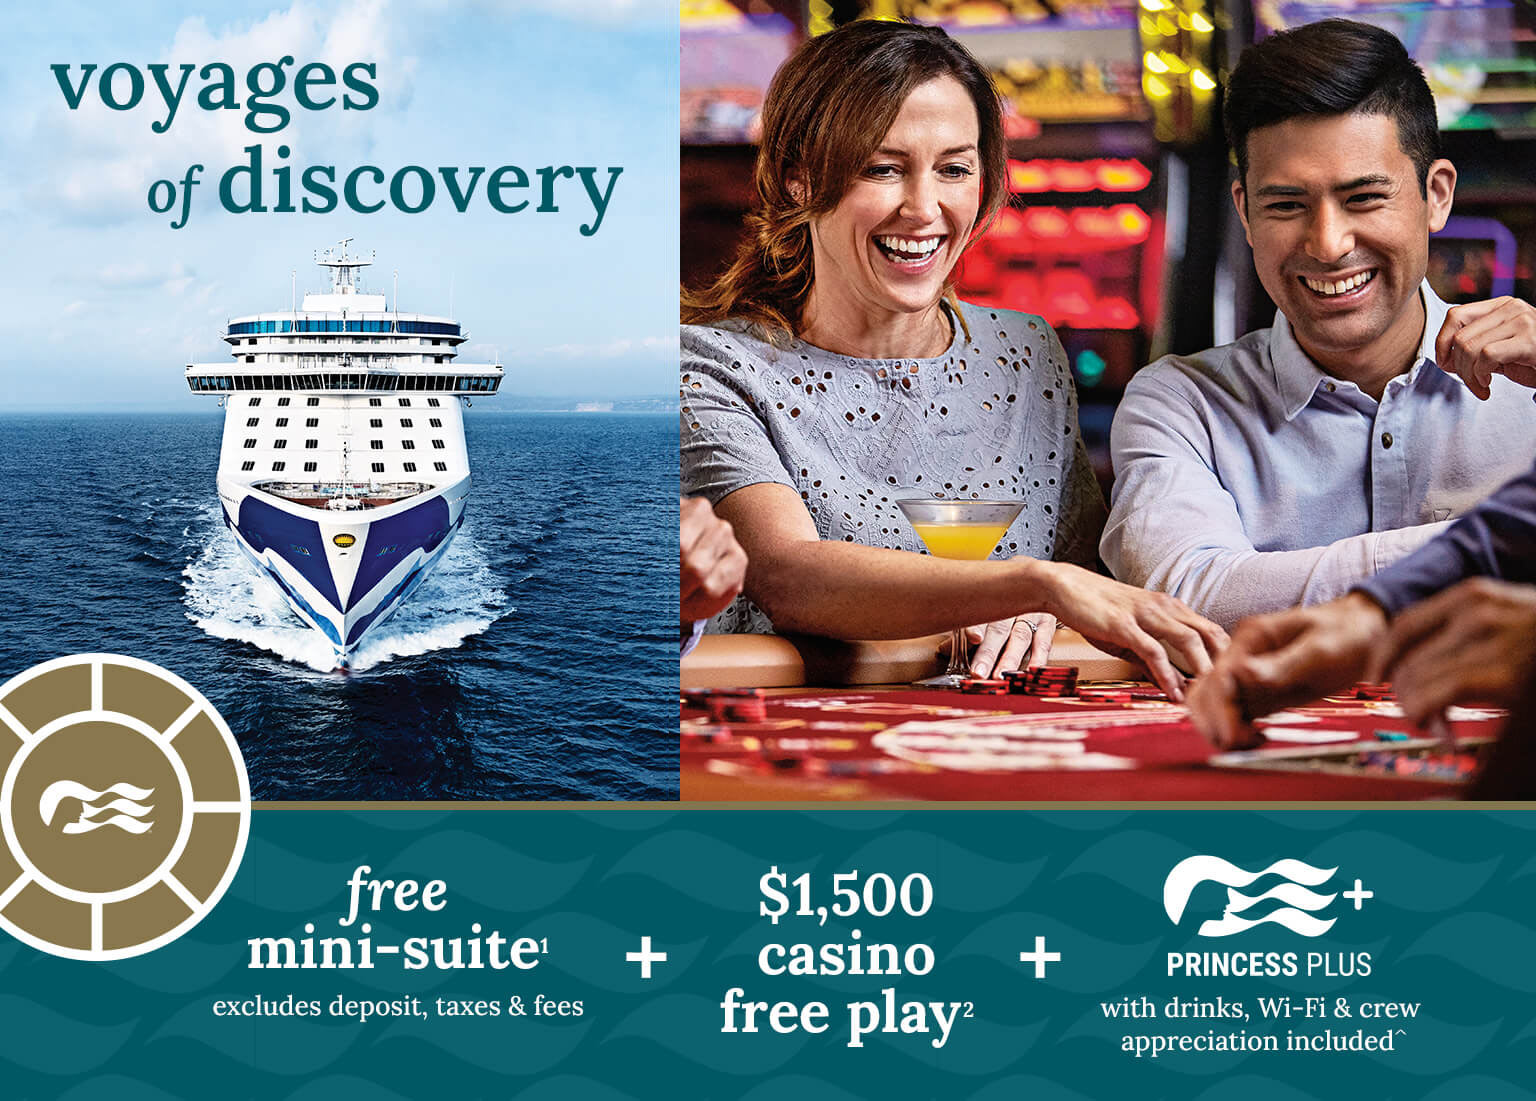 free mini-suite + $1,500 casino free play + Princess Plus. Click here to book.